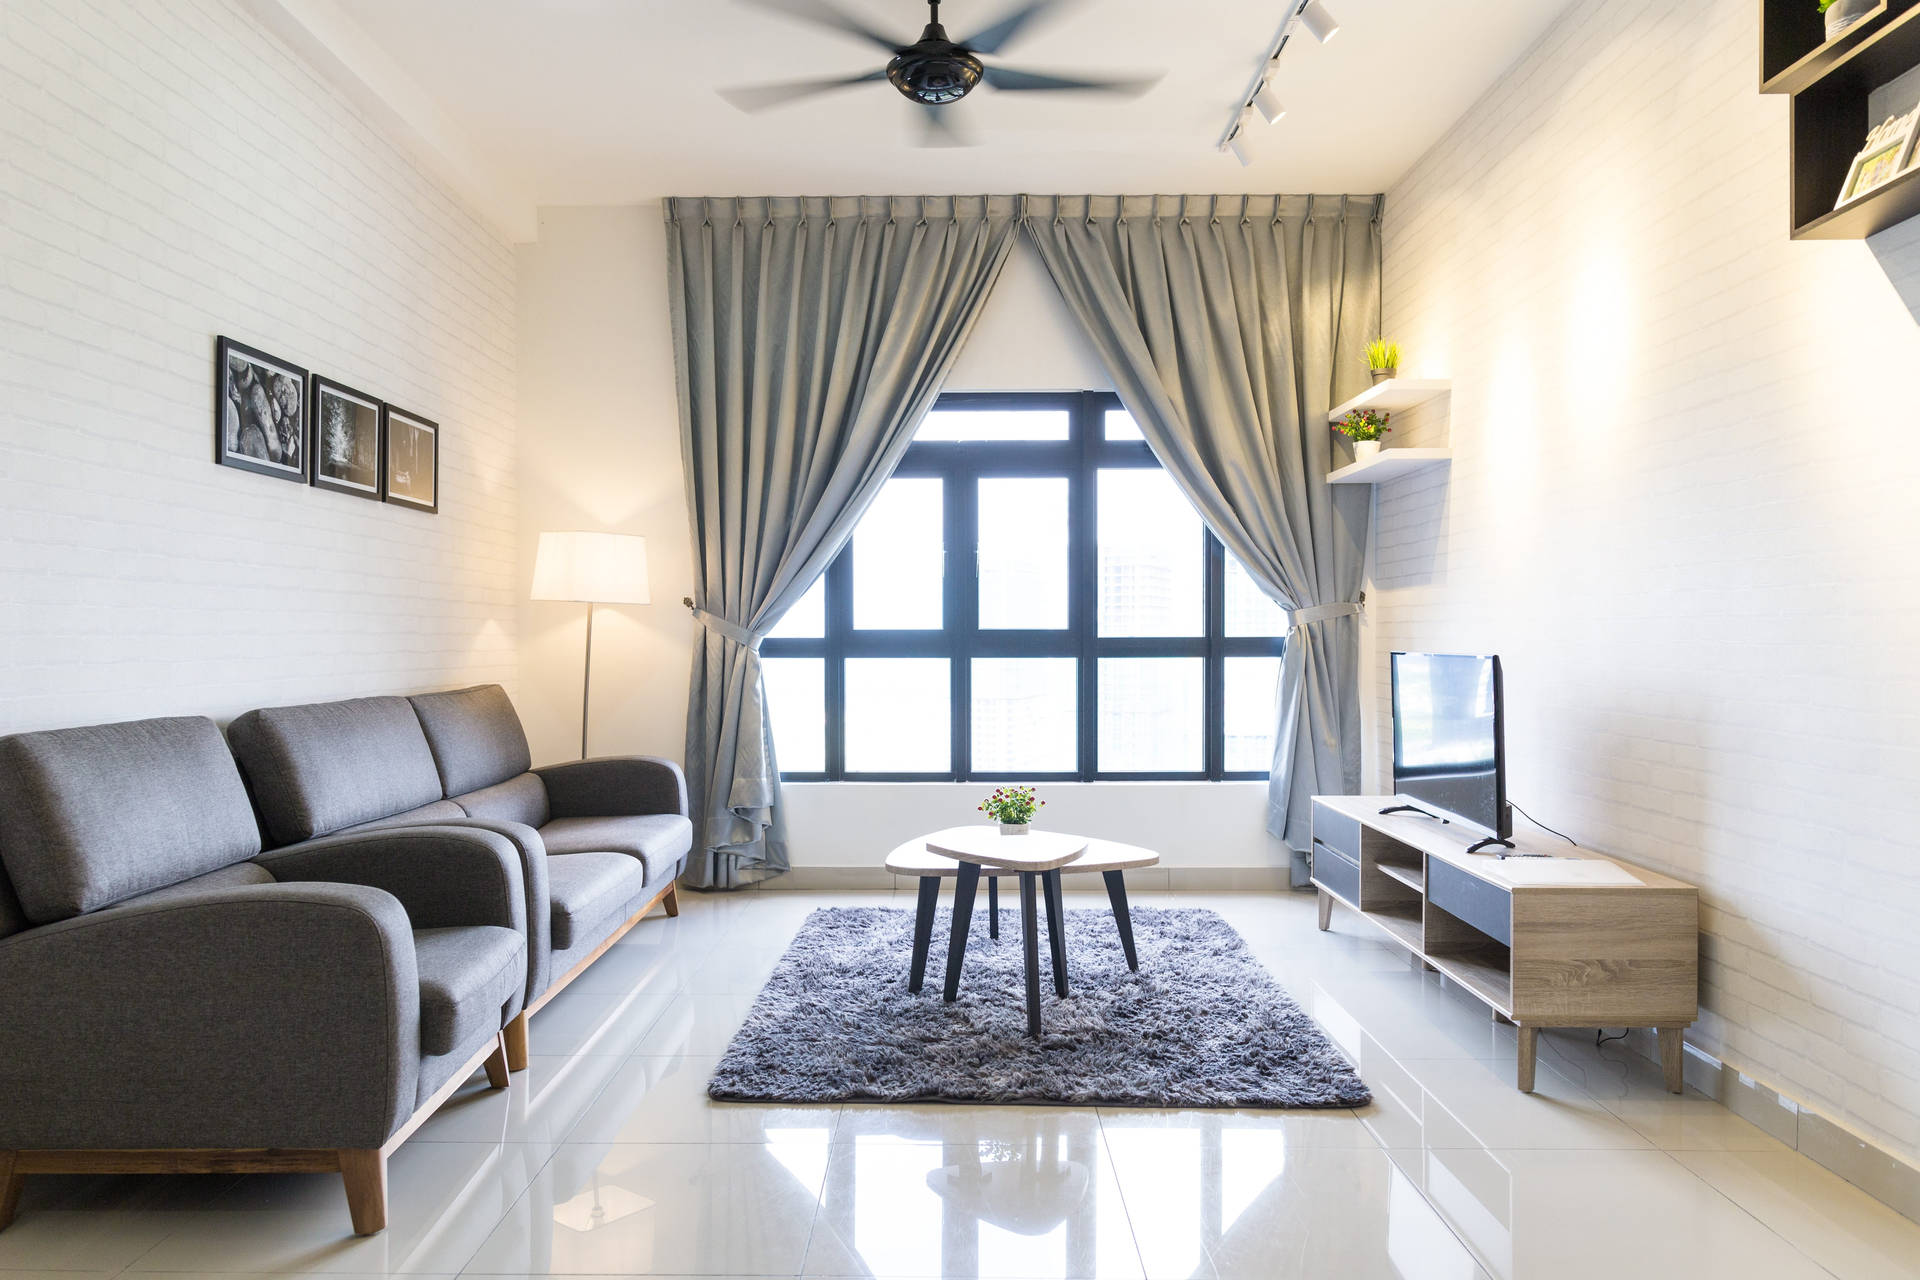 Elegant Simplicity: An Aesthetic White-themed Living Room